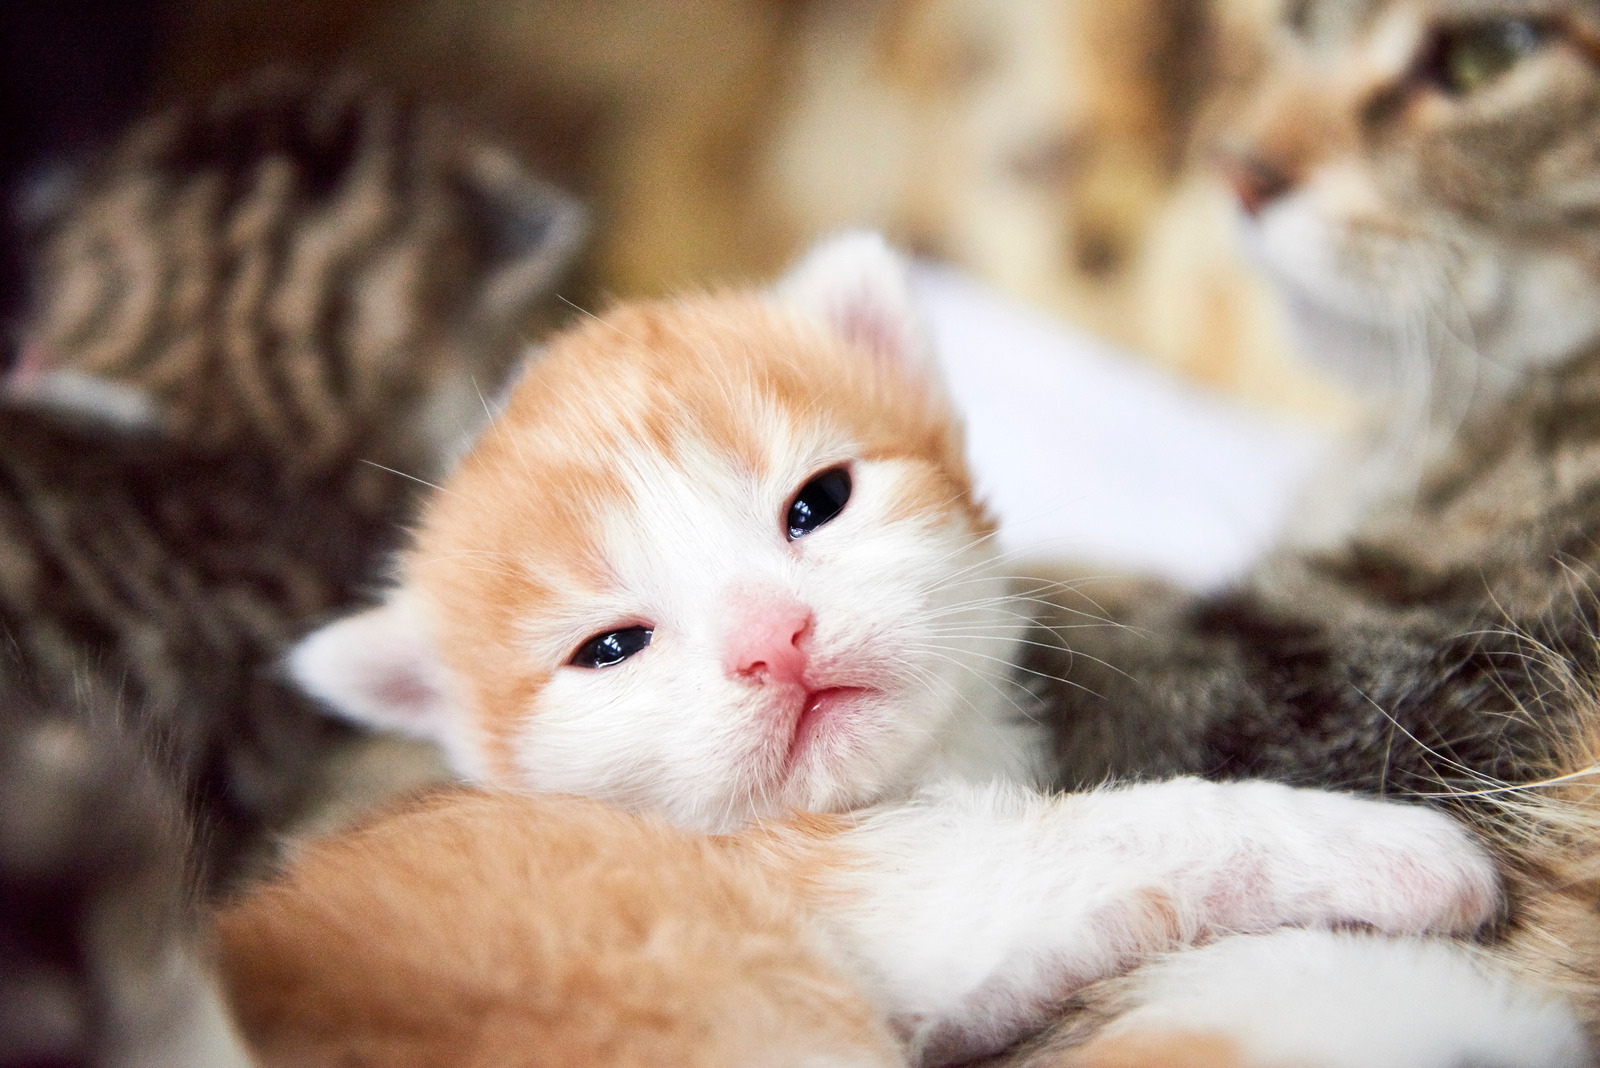 Bruine kat na bevalling met kitten|Rode pasgeboren kittens na bevalling kat